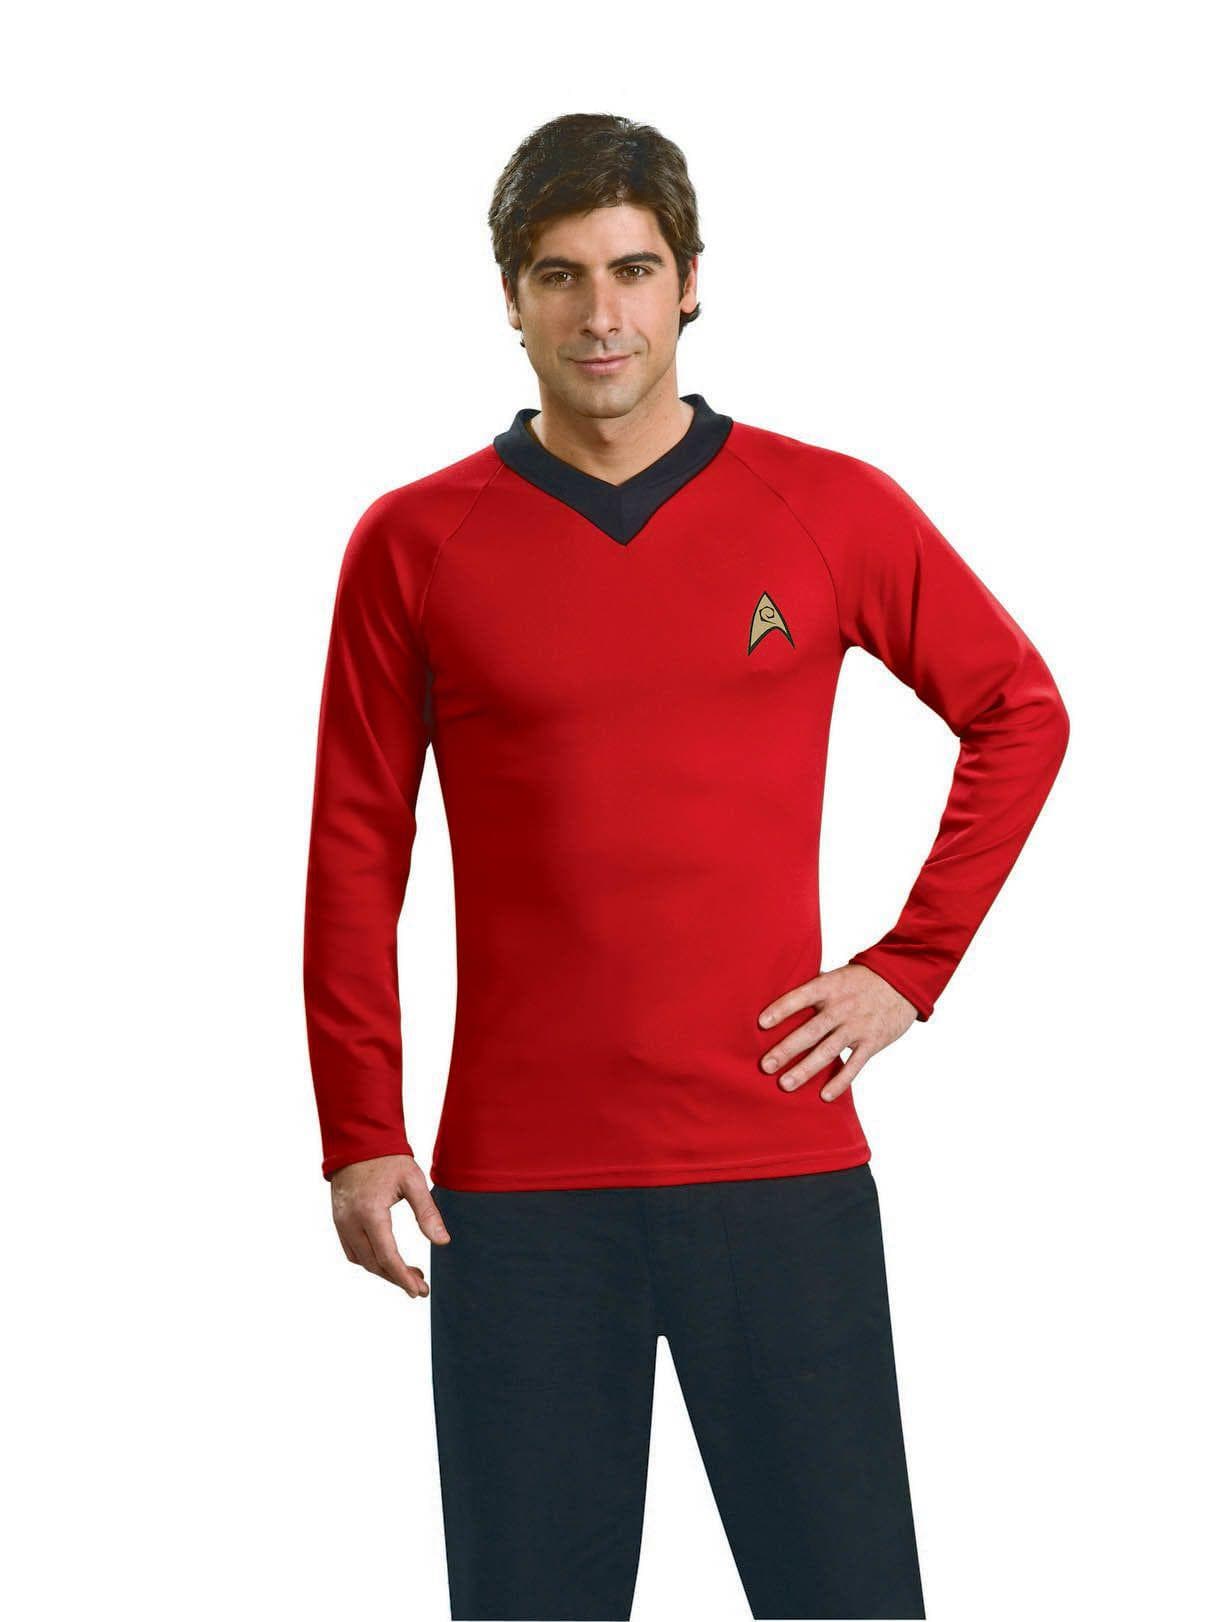 Men's Classic Star Trek Scotty Shirt - Premium - costumes.com